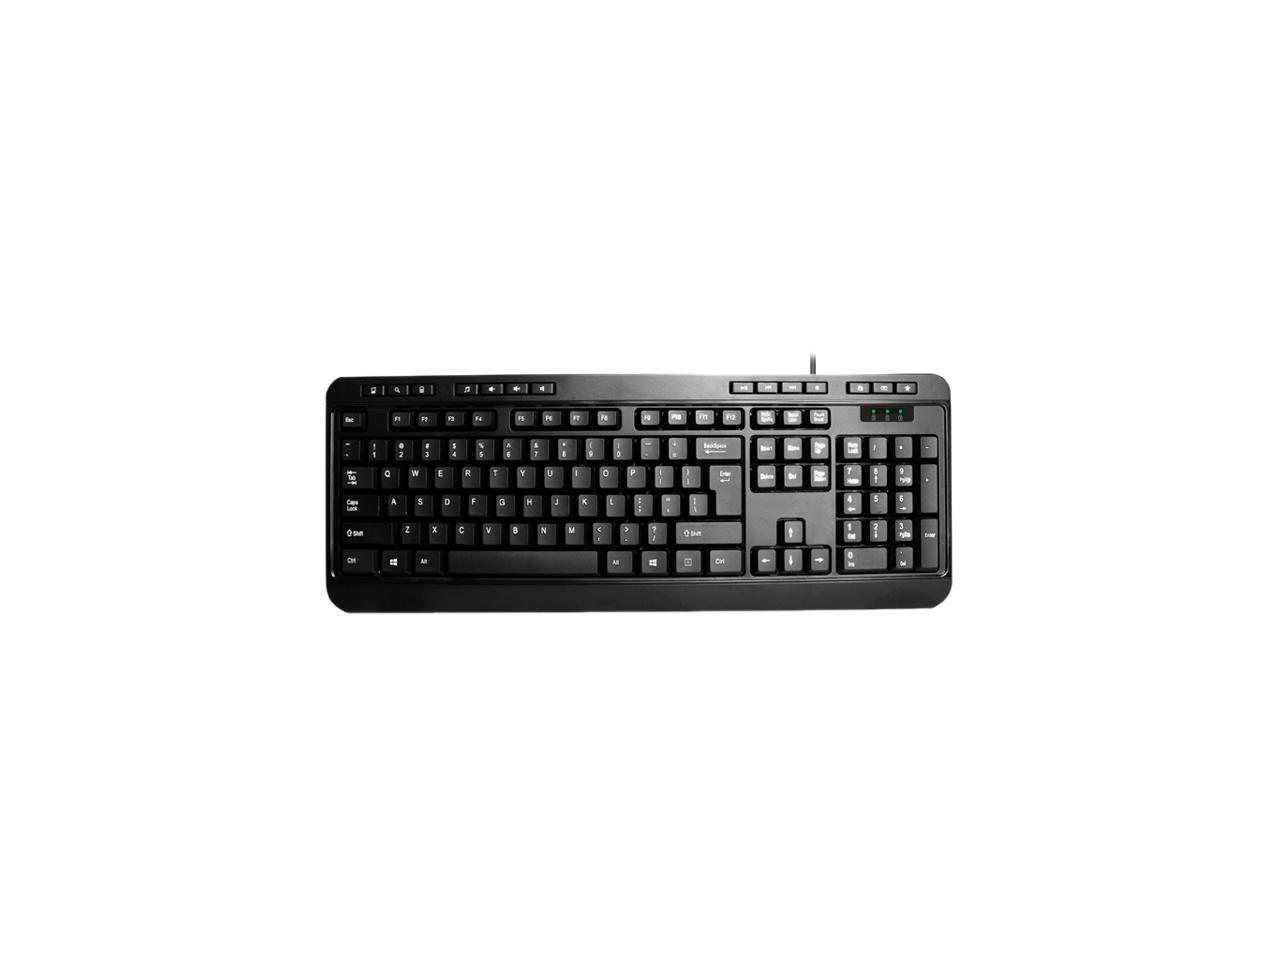 Adesso AKB-132PB Desktop Multimedia PS/2 keyboard (Black)